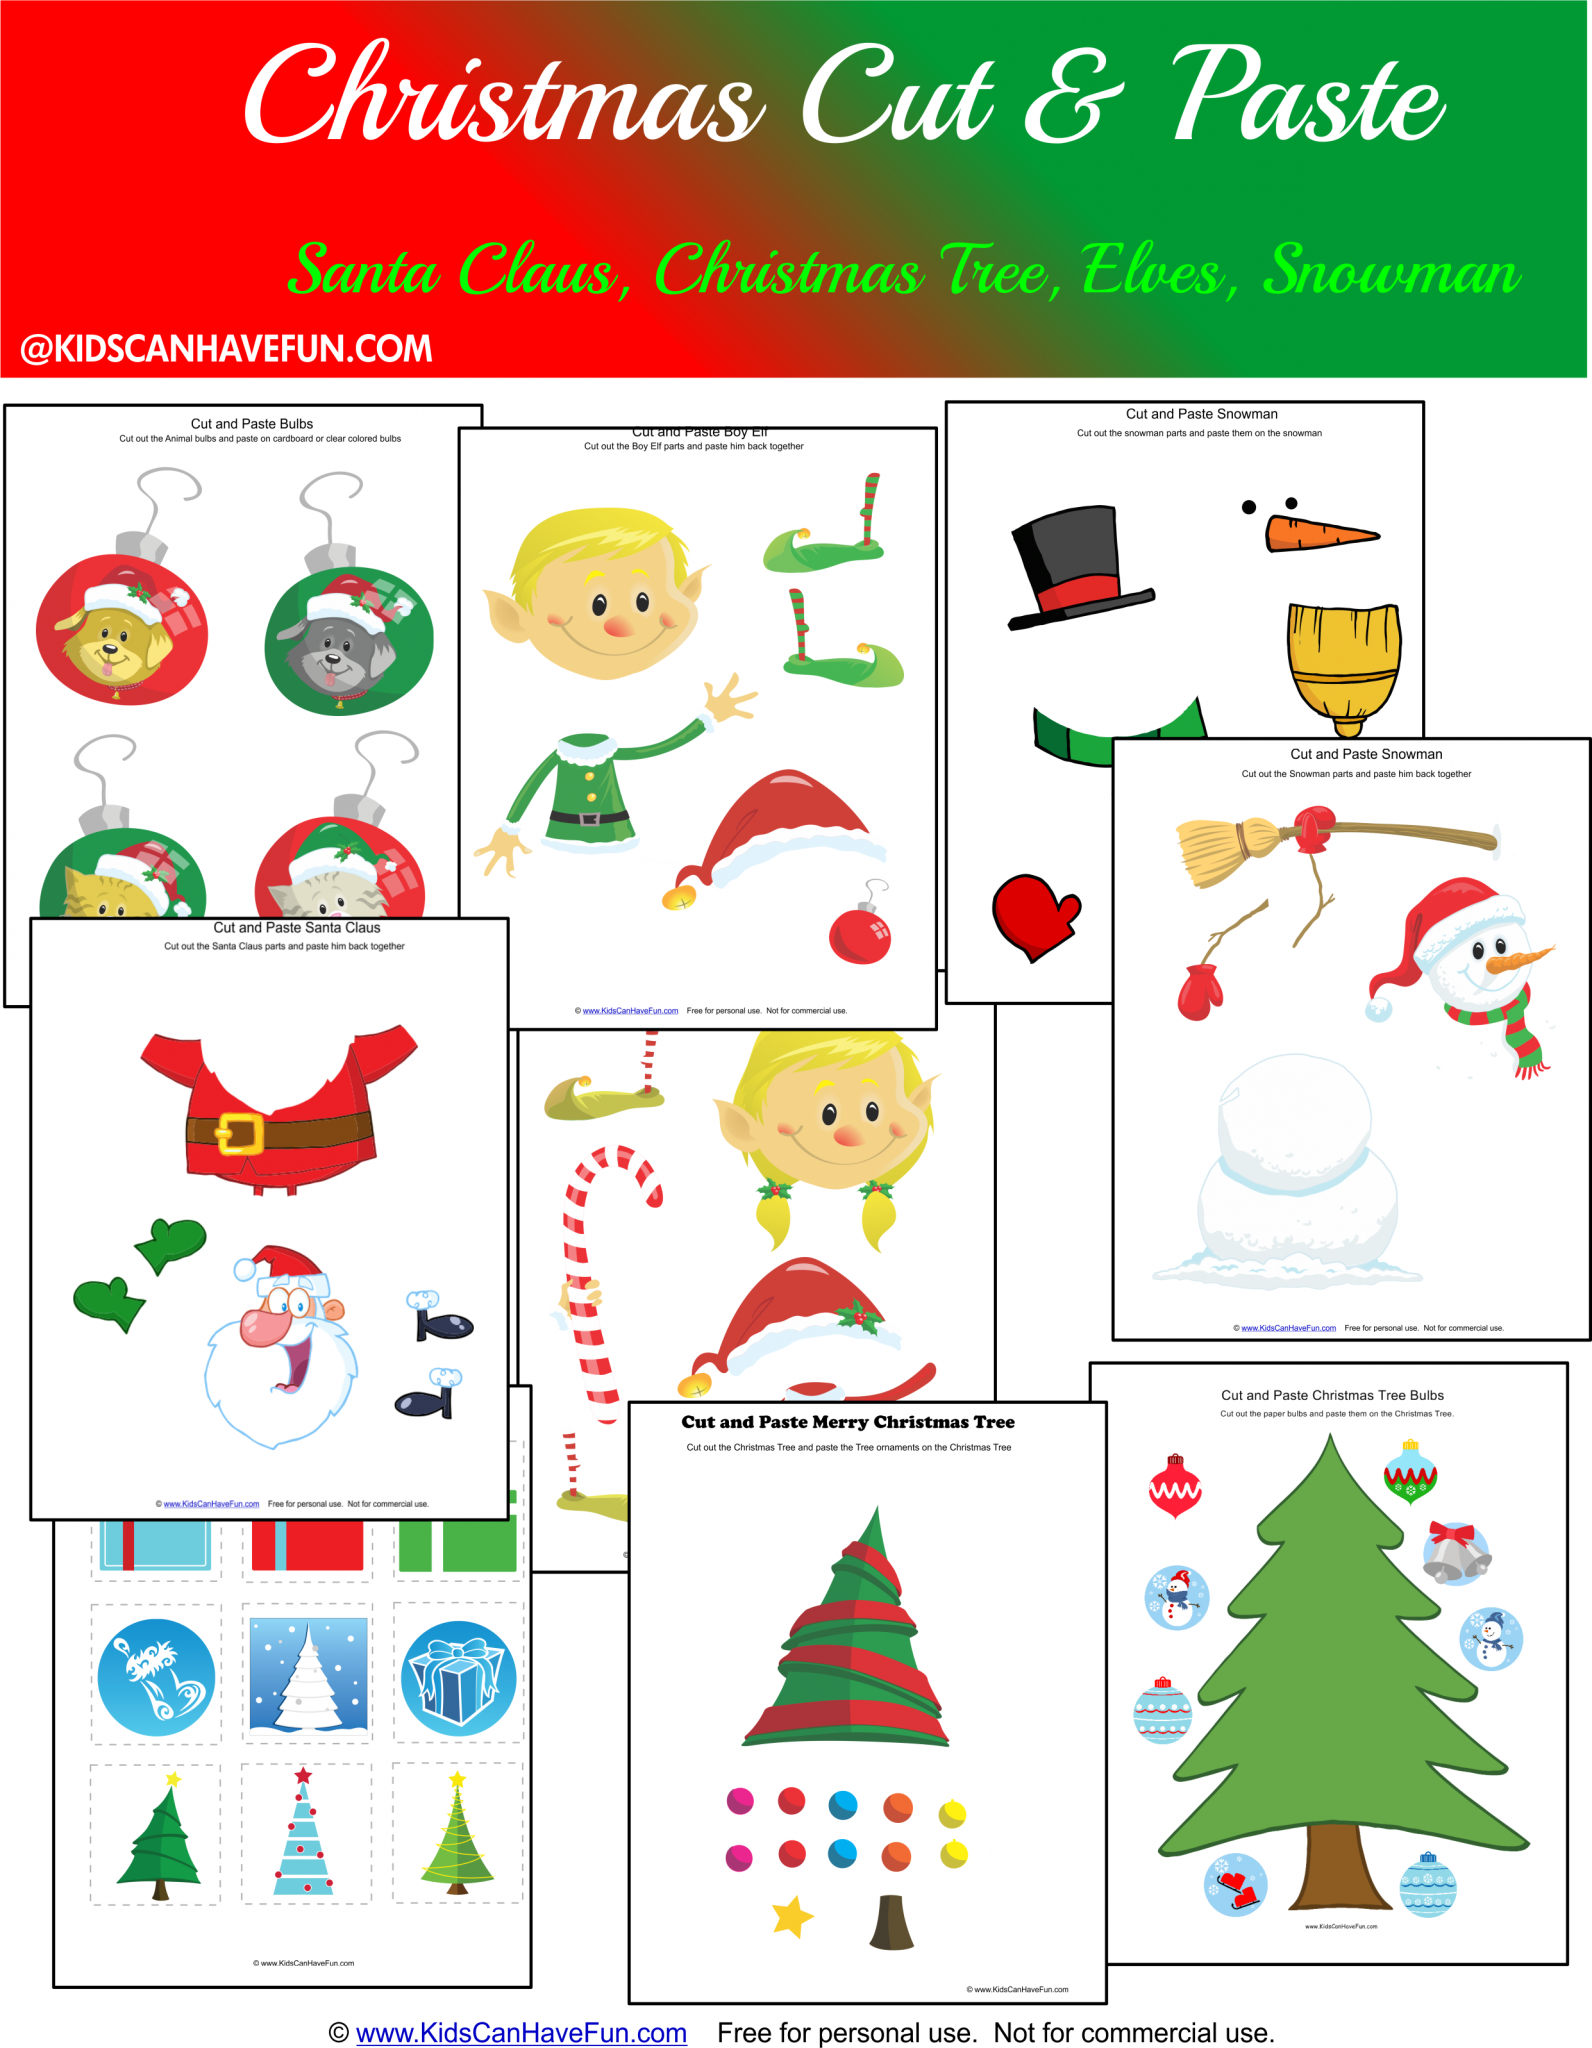 kidscanhavefun-blog-page-10-of-24-kids-printable-activities-crafts